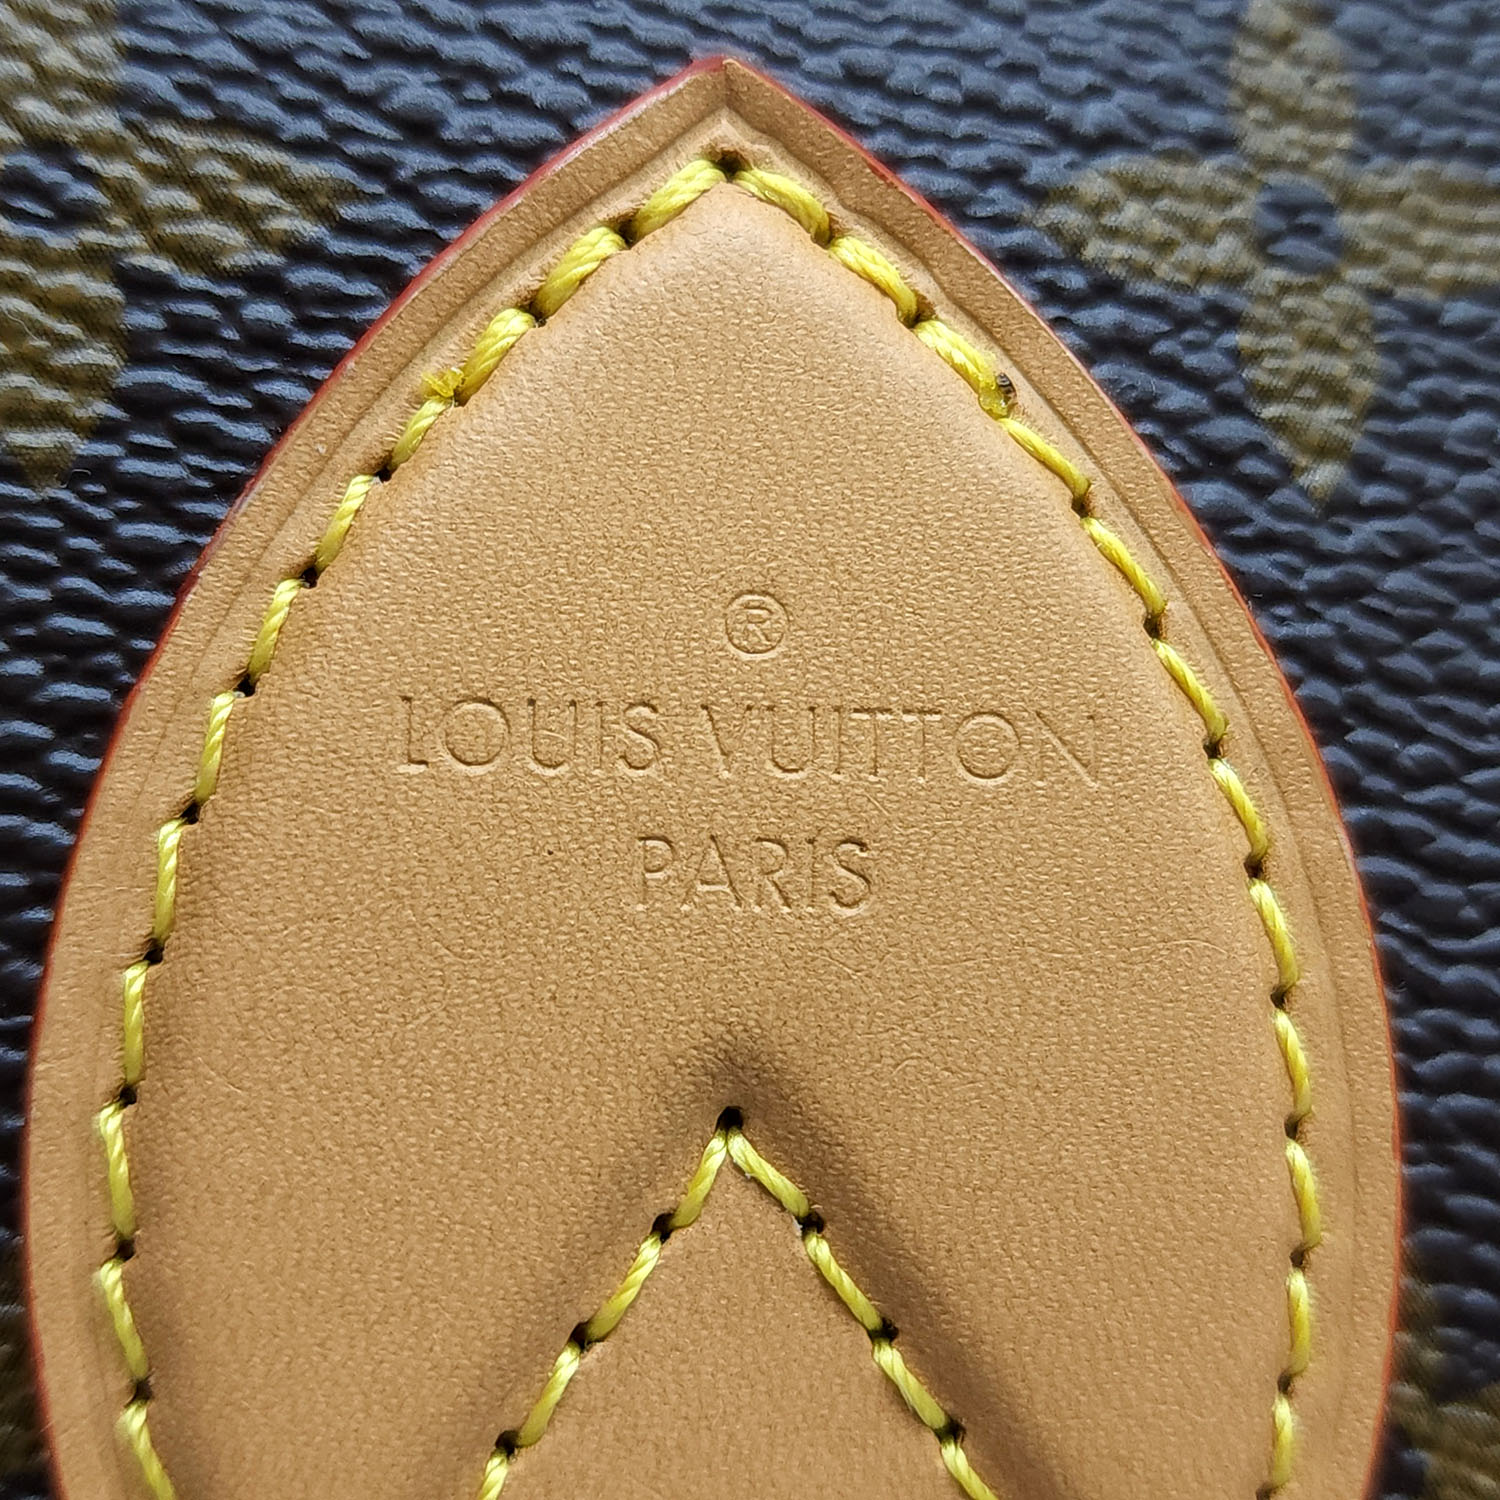 STUNNING!🤩* UNBOXING Louis Vuitton DIANE FUCHSIA  FIRST IMPRESSIONS! MOD  SHOTS! DONT SETTLE 